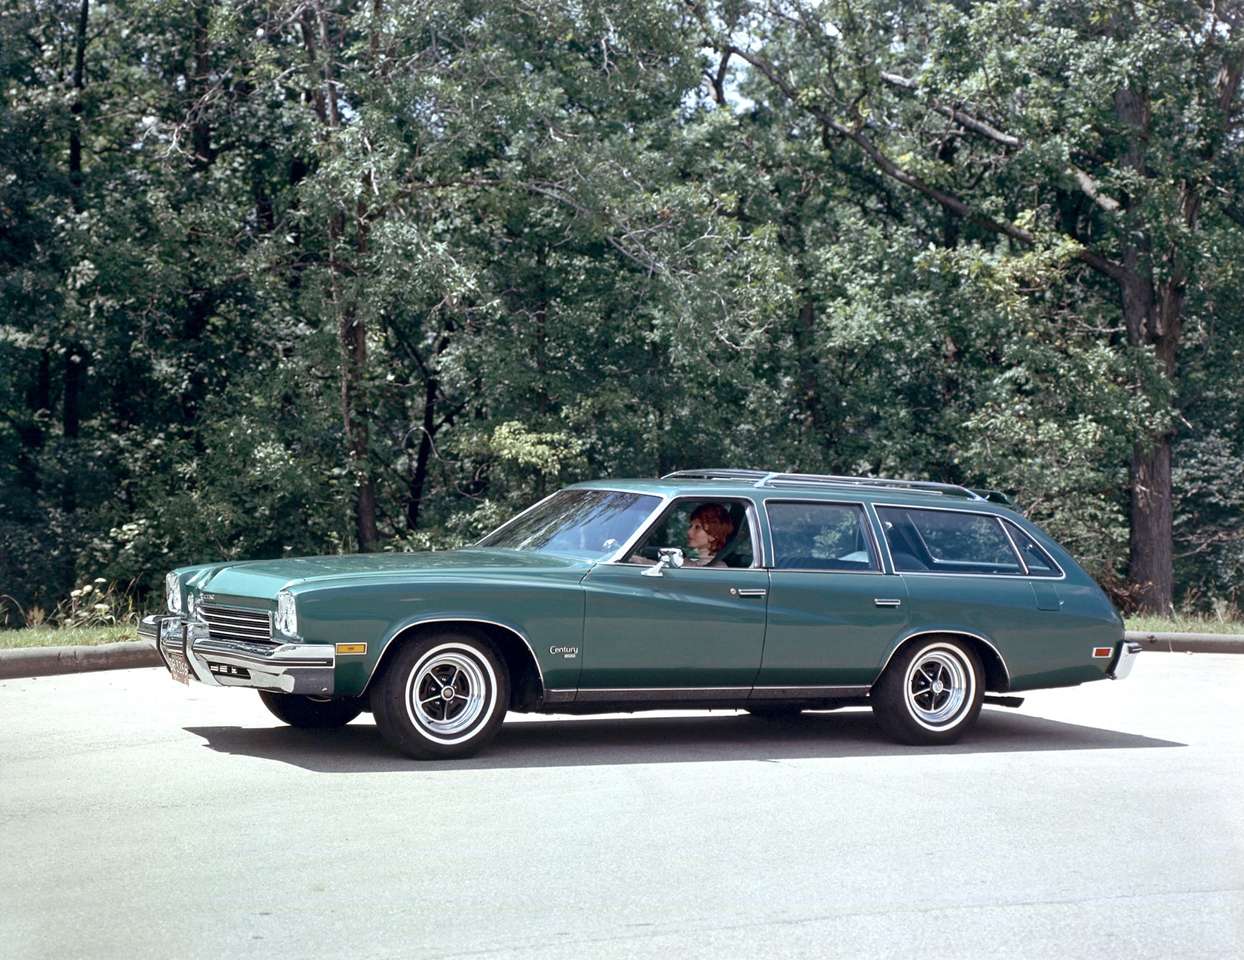 1973 Buick Century Luxus station wagon puzzle online